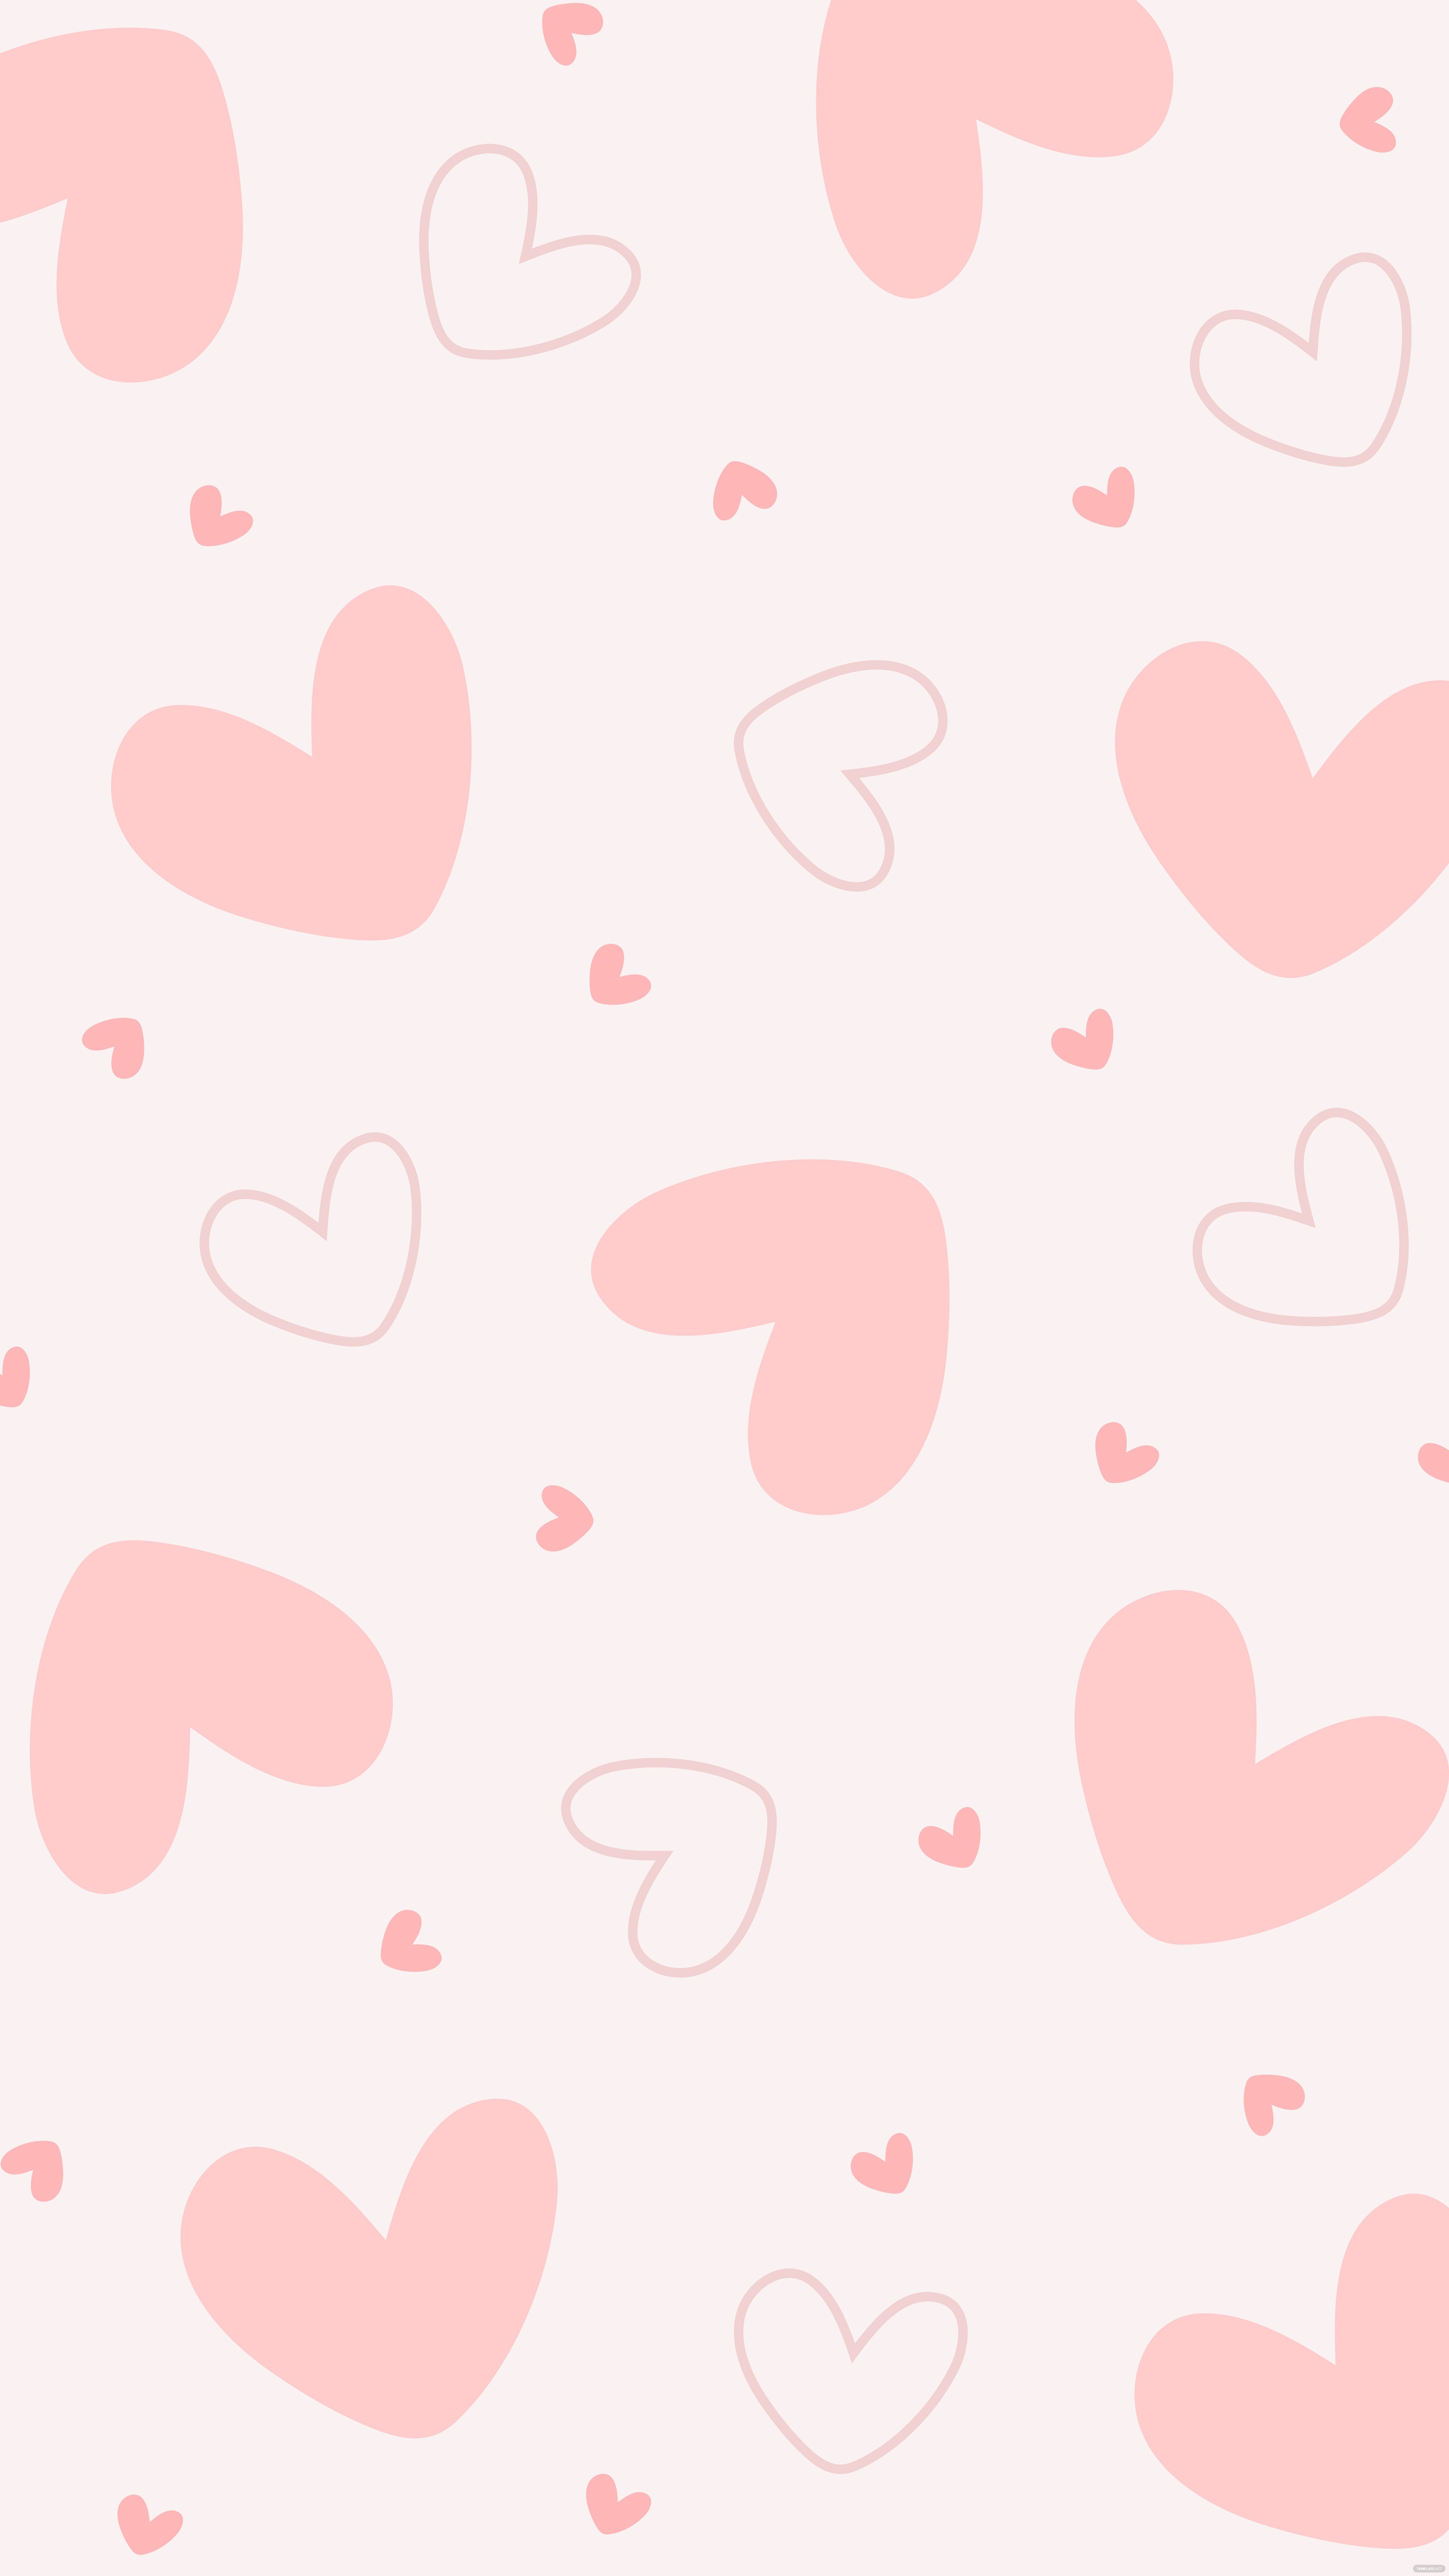 Free Free Pastel Pink Heart Background  EPS Illustrator JPG SVG  Templatenet